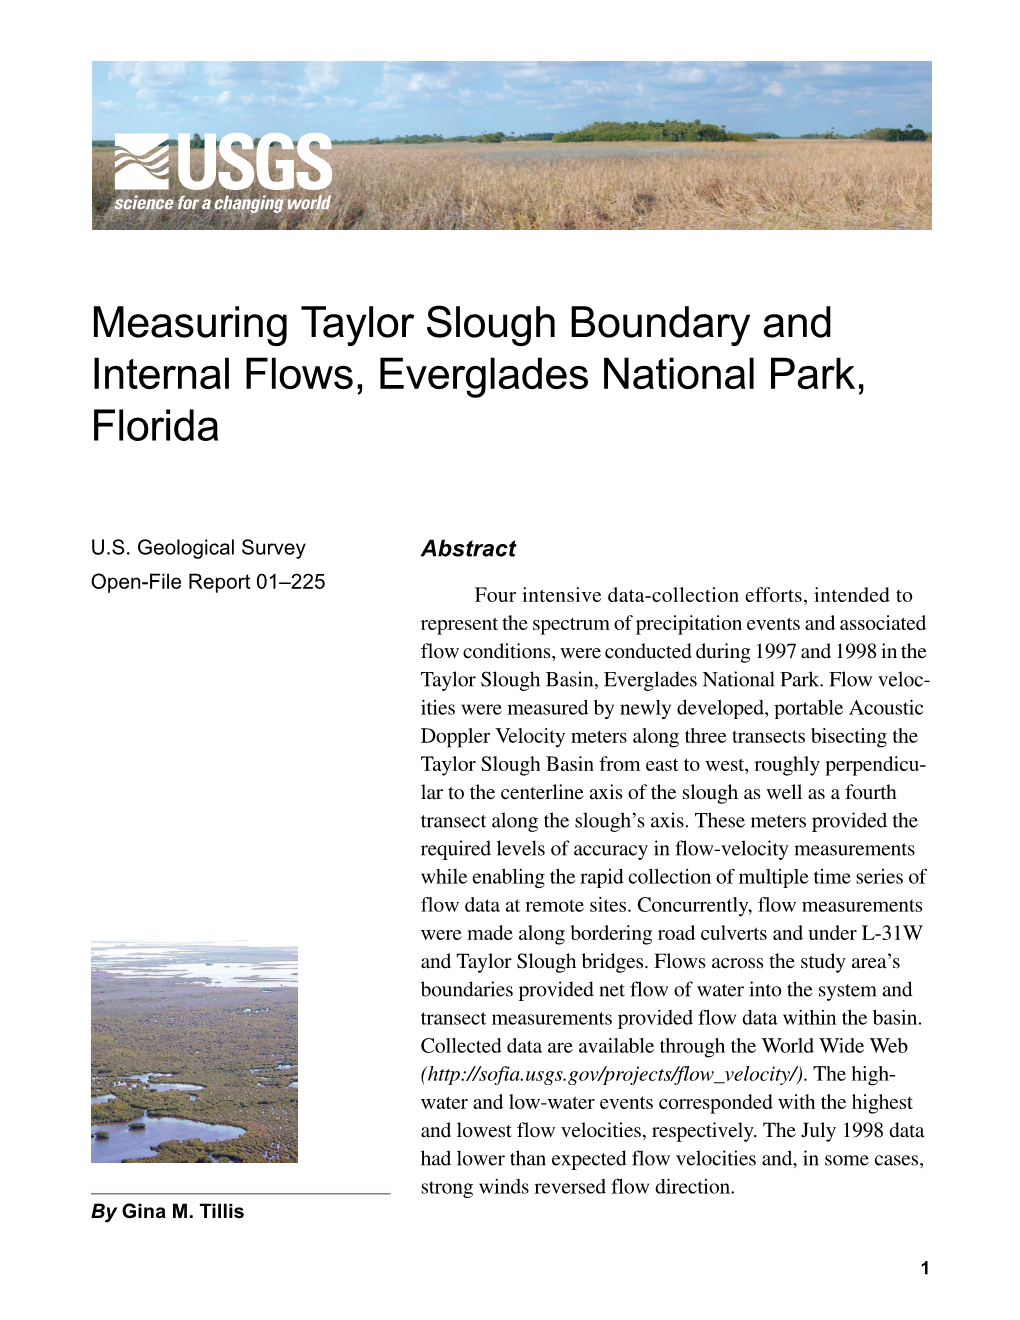 Measuring Taylor Slough Boundary and Internal Flows, Everglades National Park, Florida